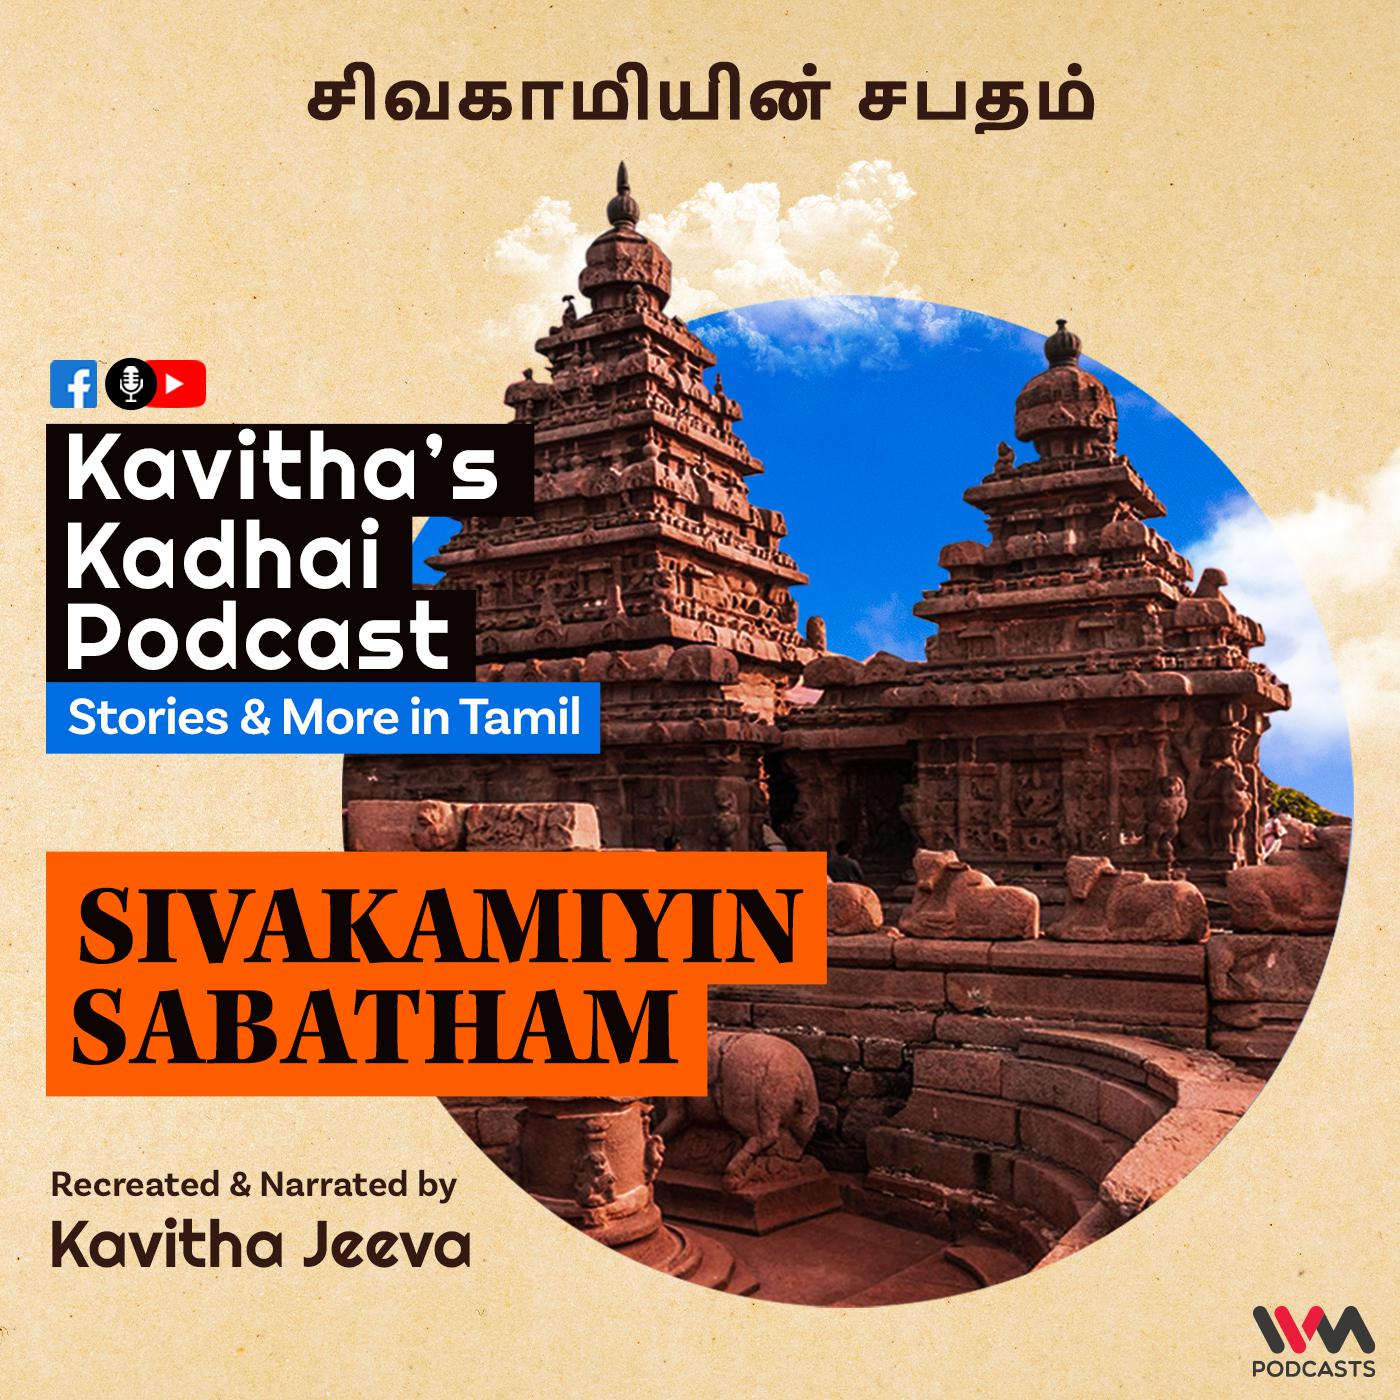 KadhaiPodcast's Sivakamiyin Sabatham with Kavitha Jeeva - Episode #142